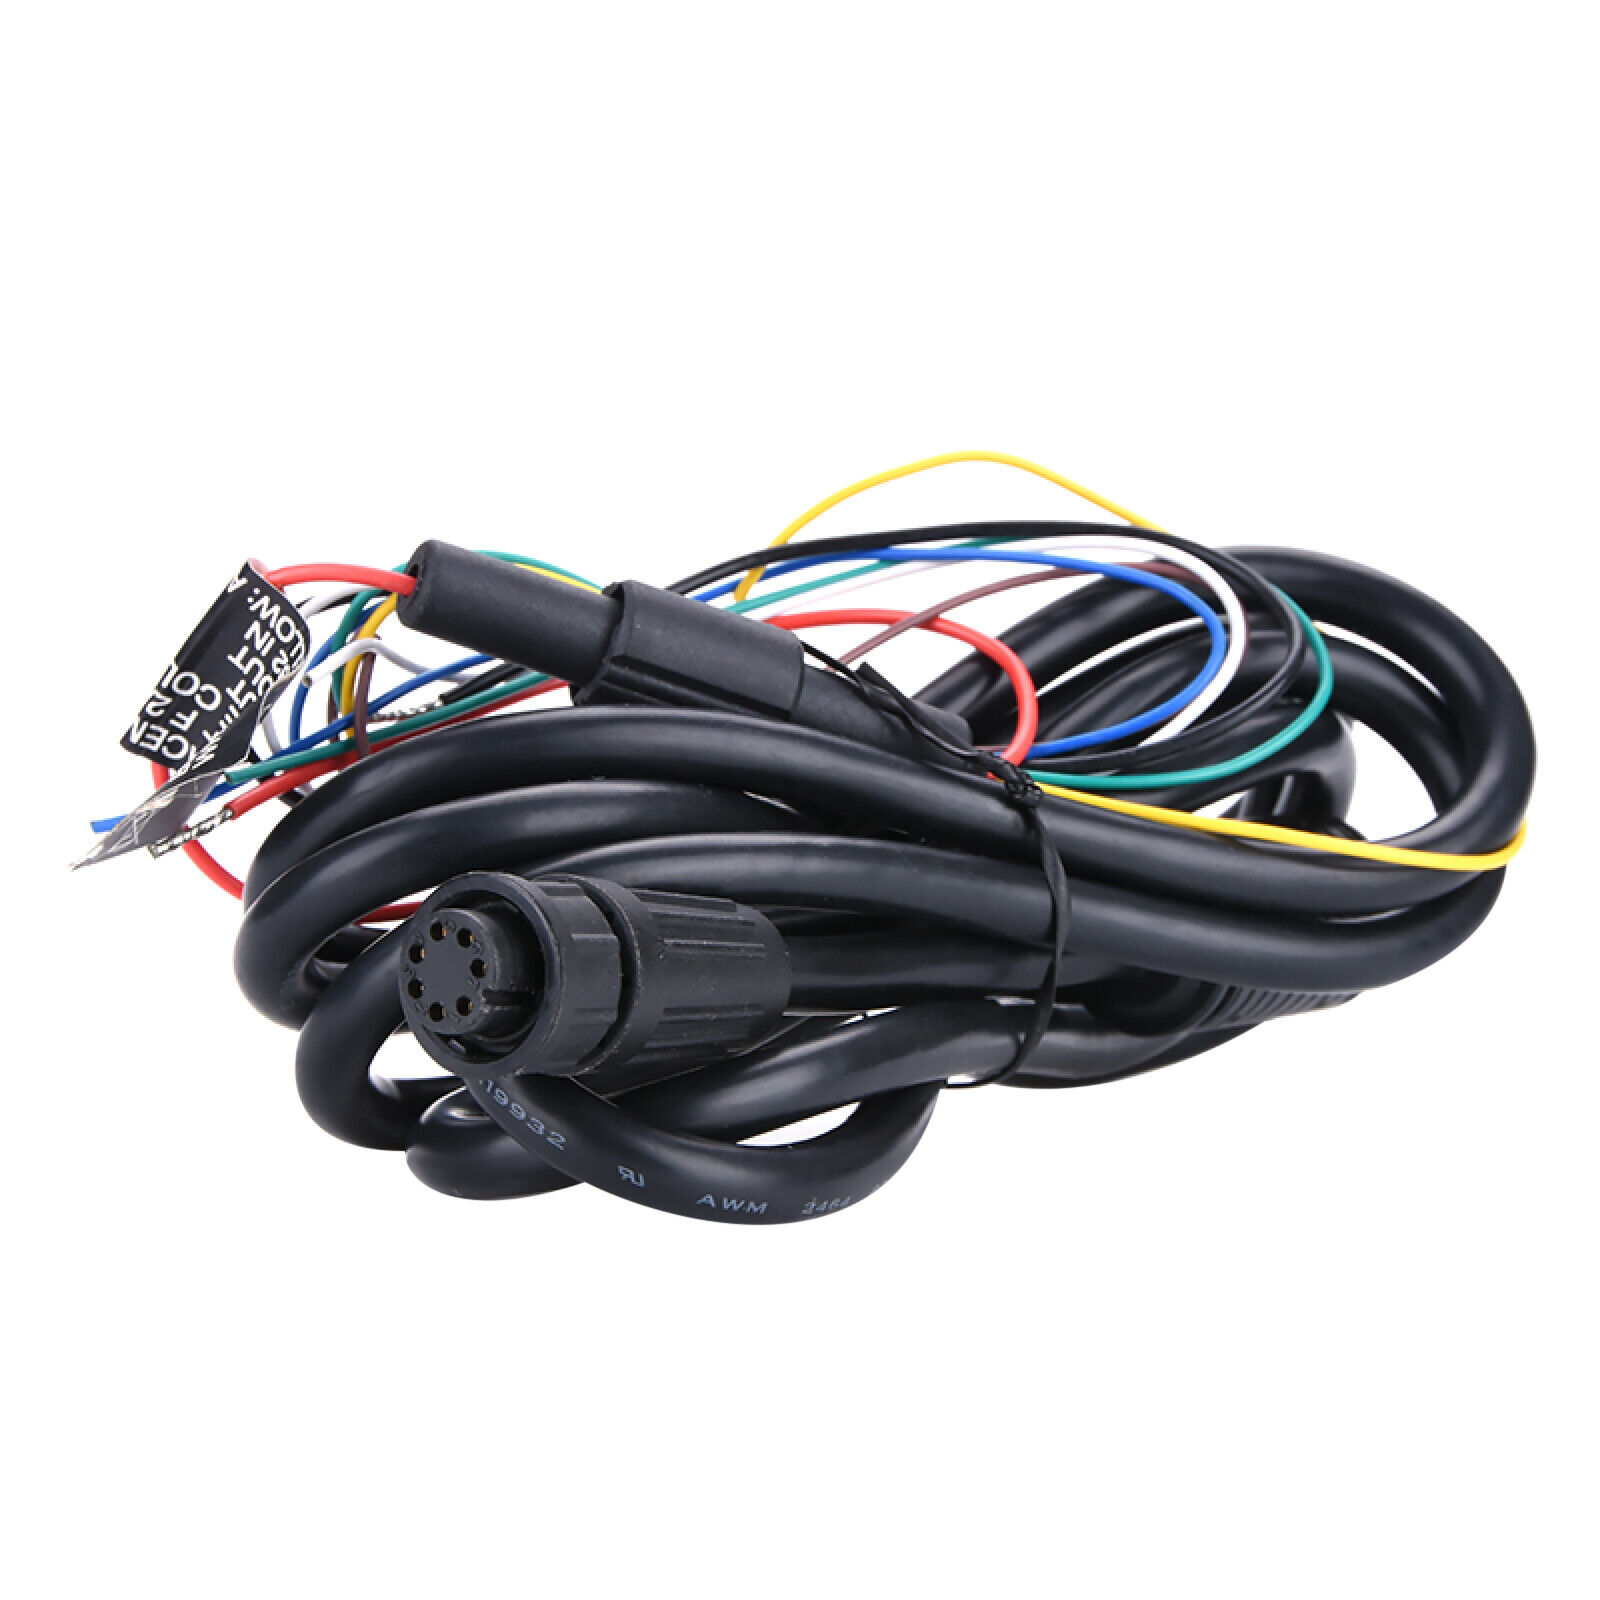 Durable 7-Pin Power Cable For GARMIN POWER CABLE GPSMAP 128 152 192C 580 GPS E